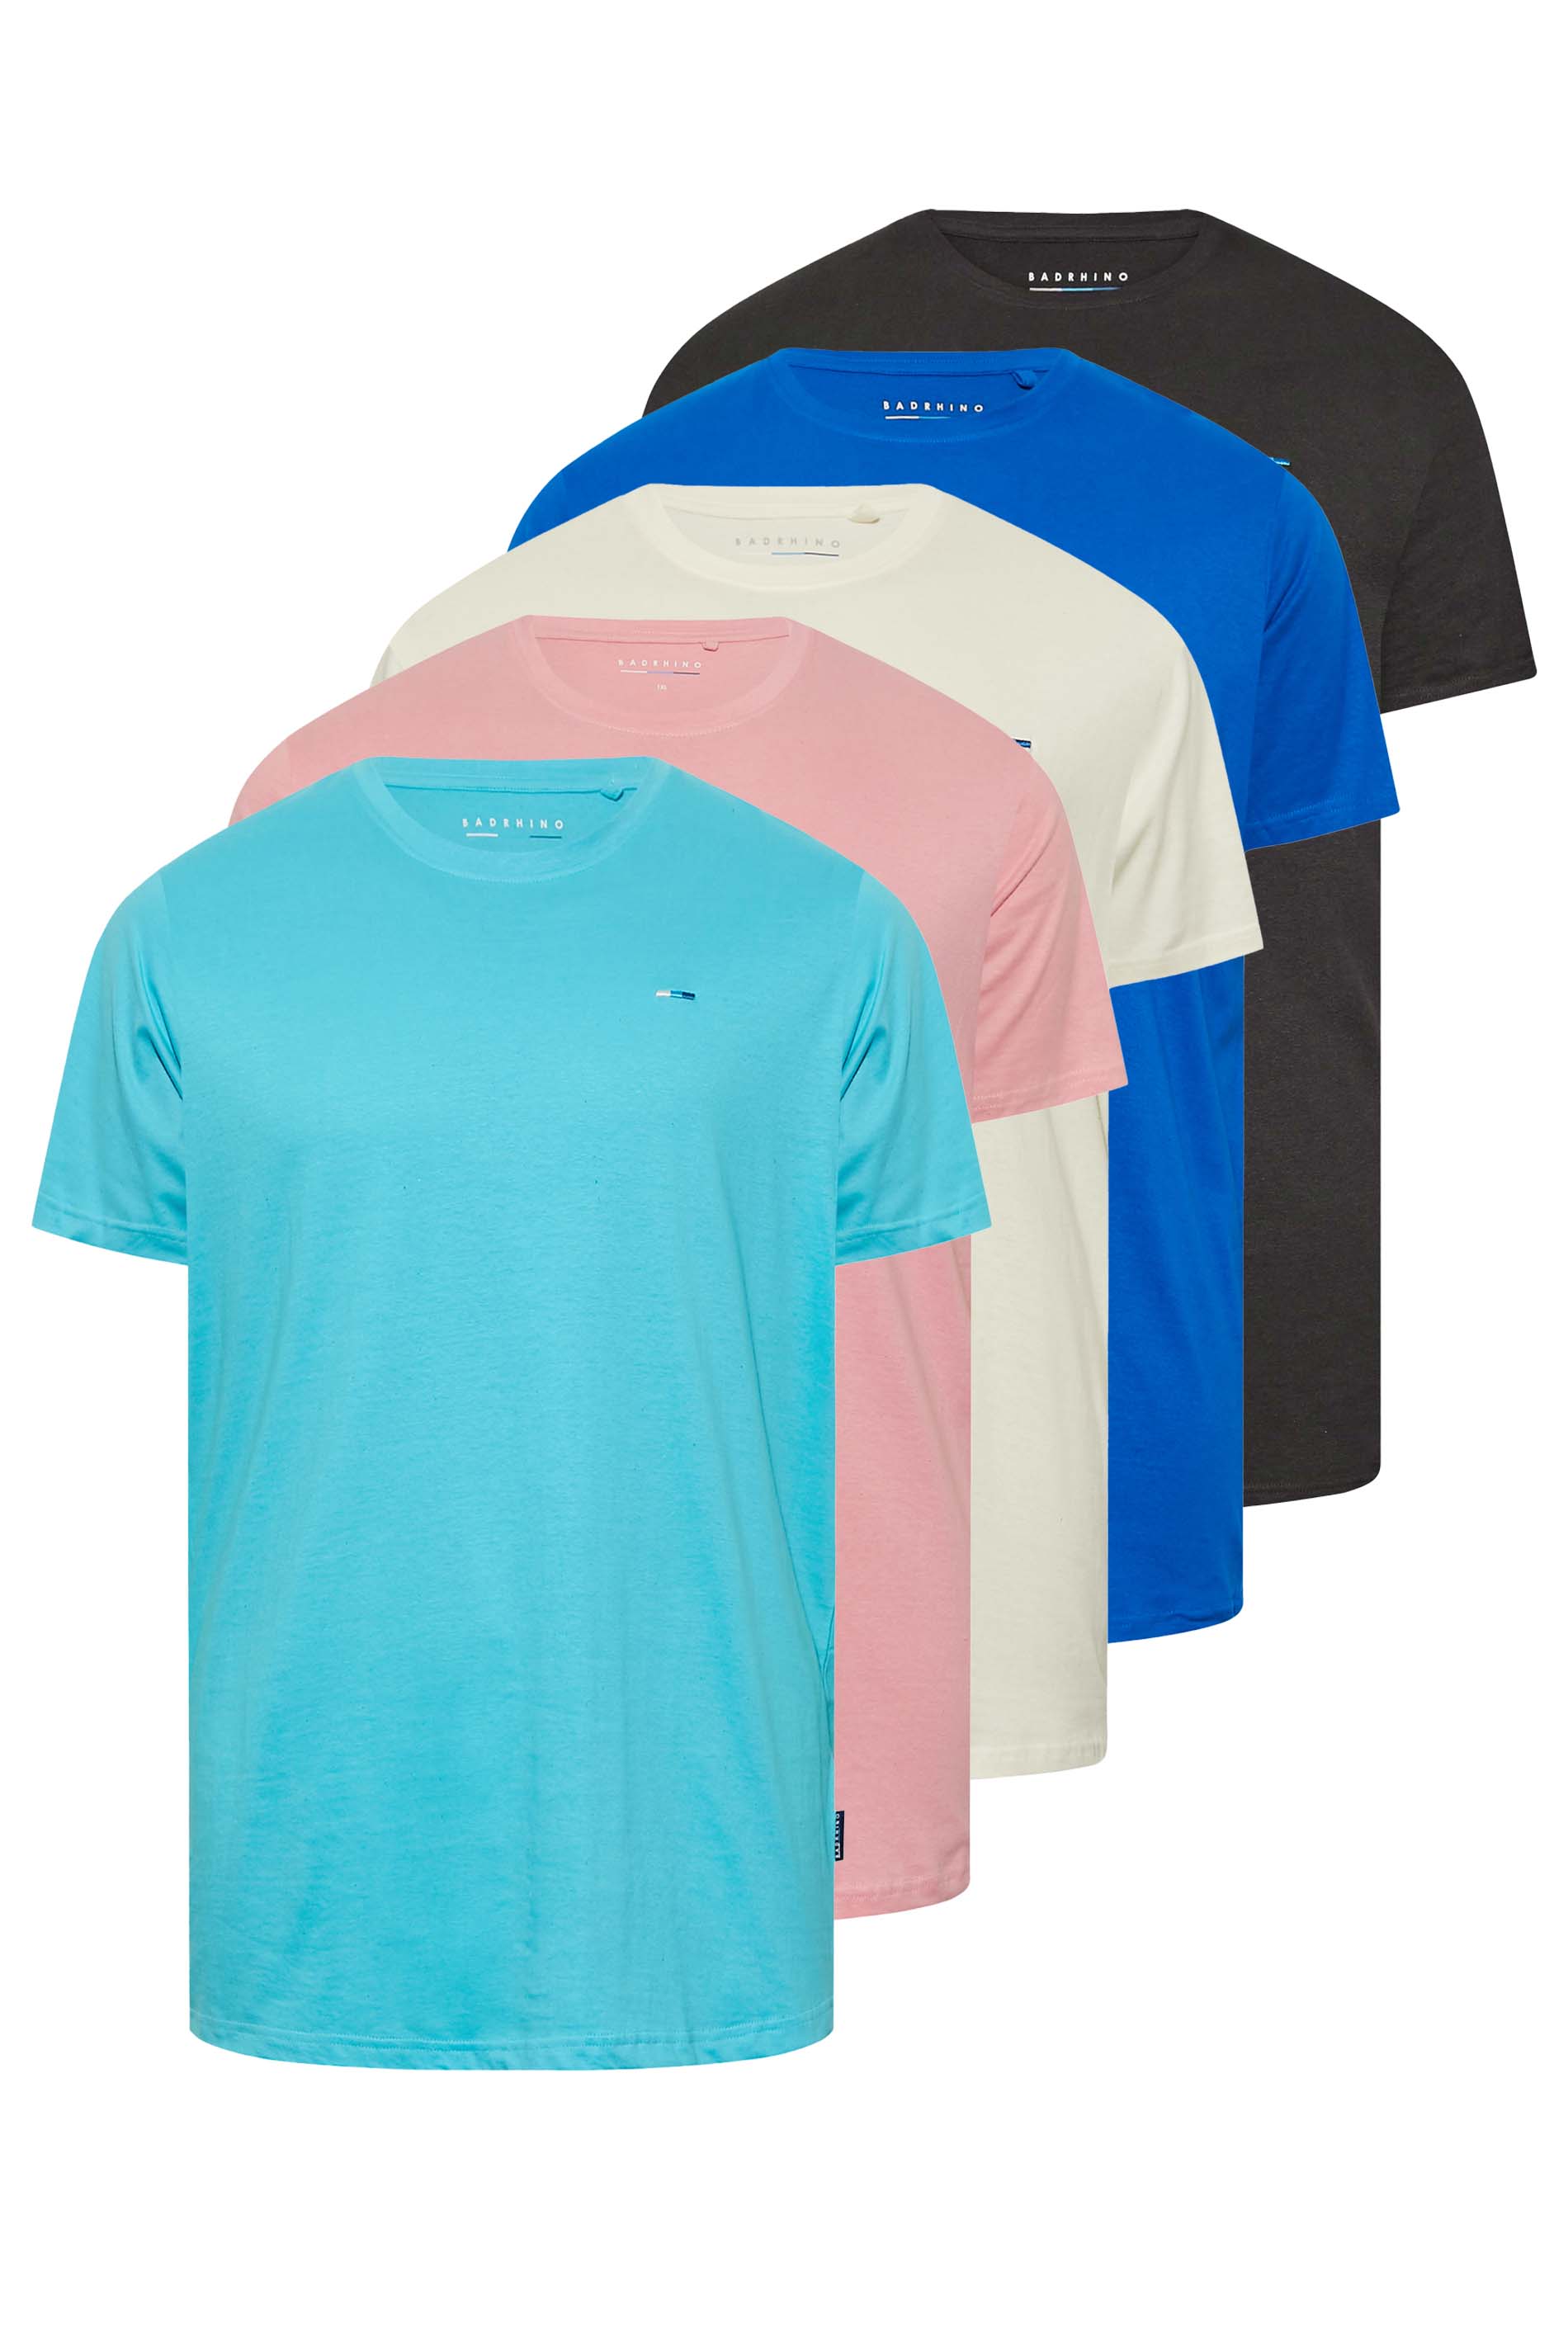 BadRhino Big & Tall 5 Pack Blue & Pink Core T-Shirts | BadRhino 2